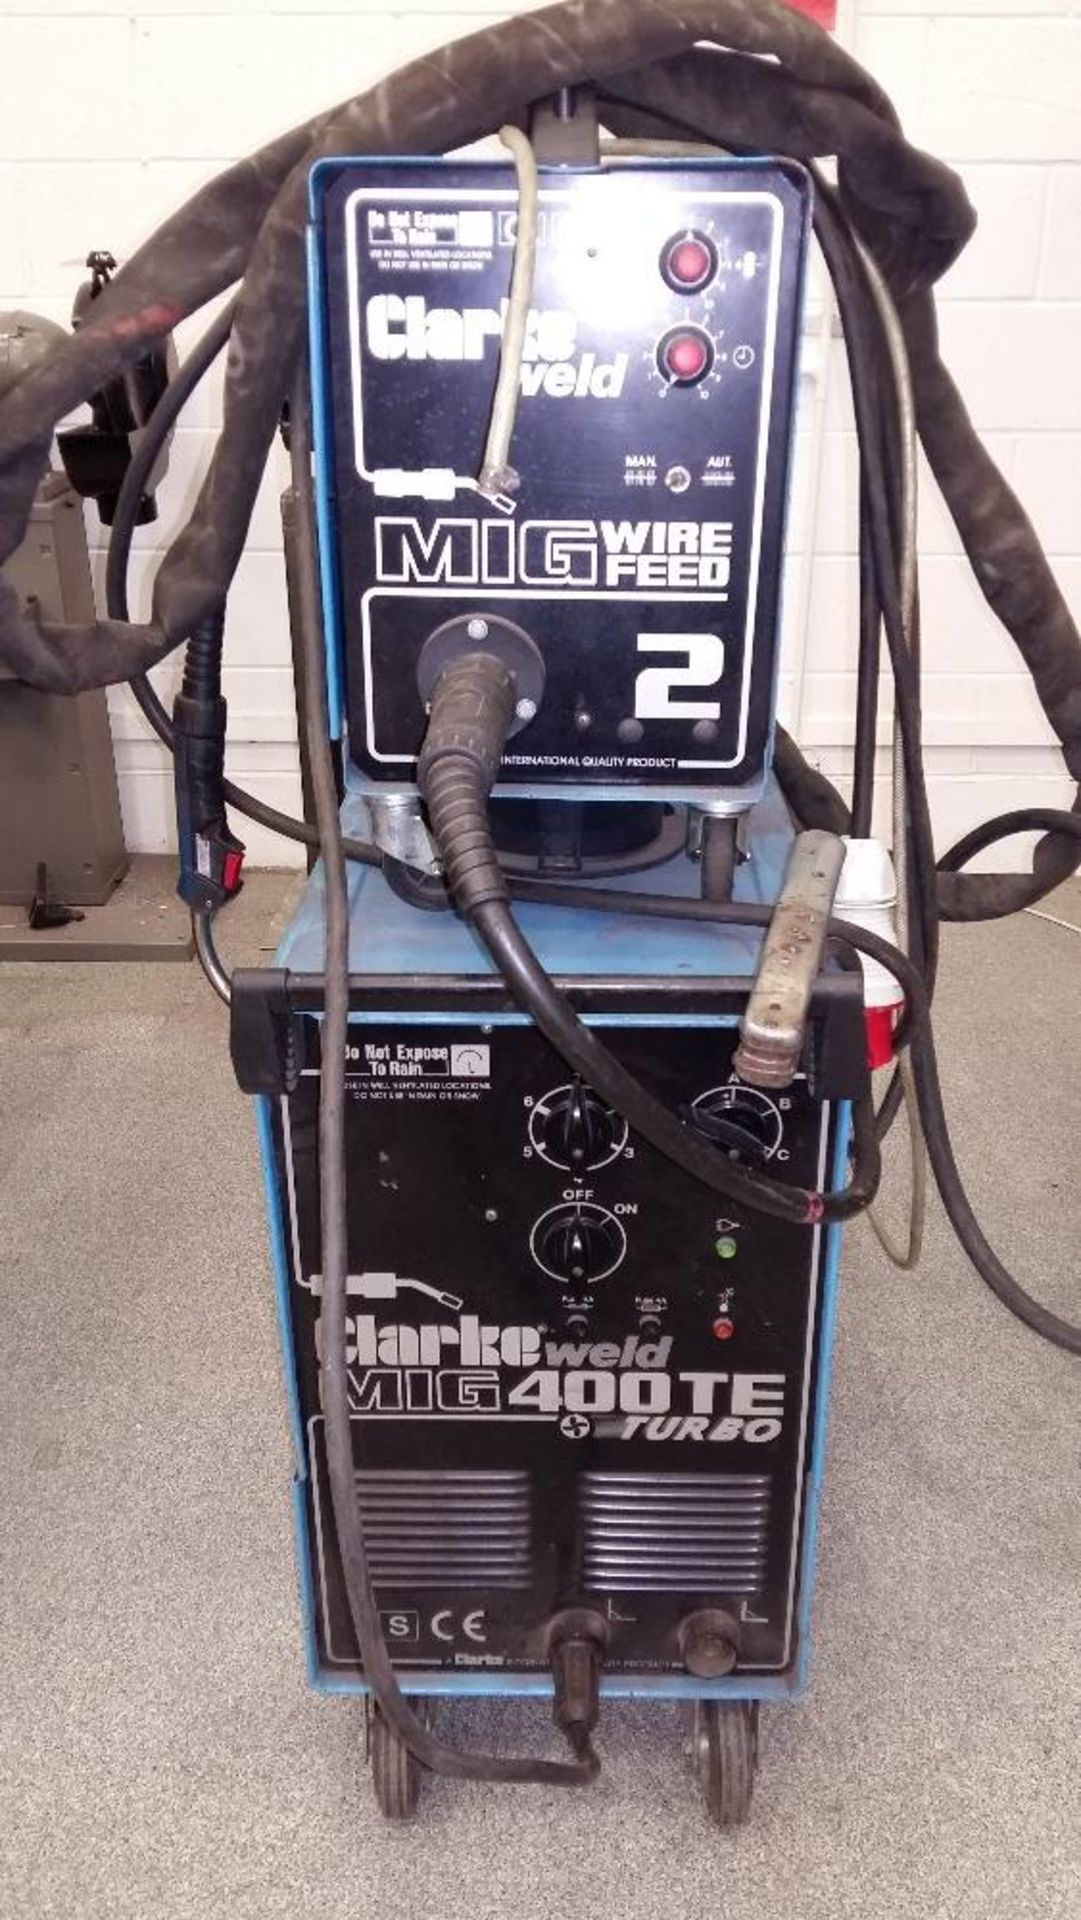 Clarke Weld Mig 400 TE turbo mig welder & Mig Wire Feed 2 unit - Image 2 of 9